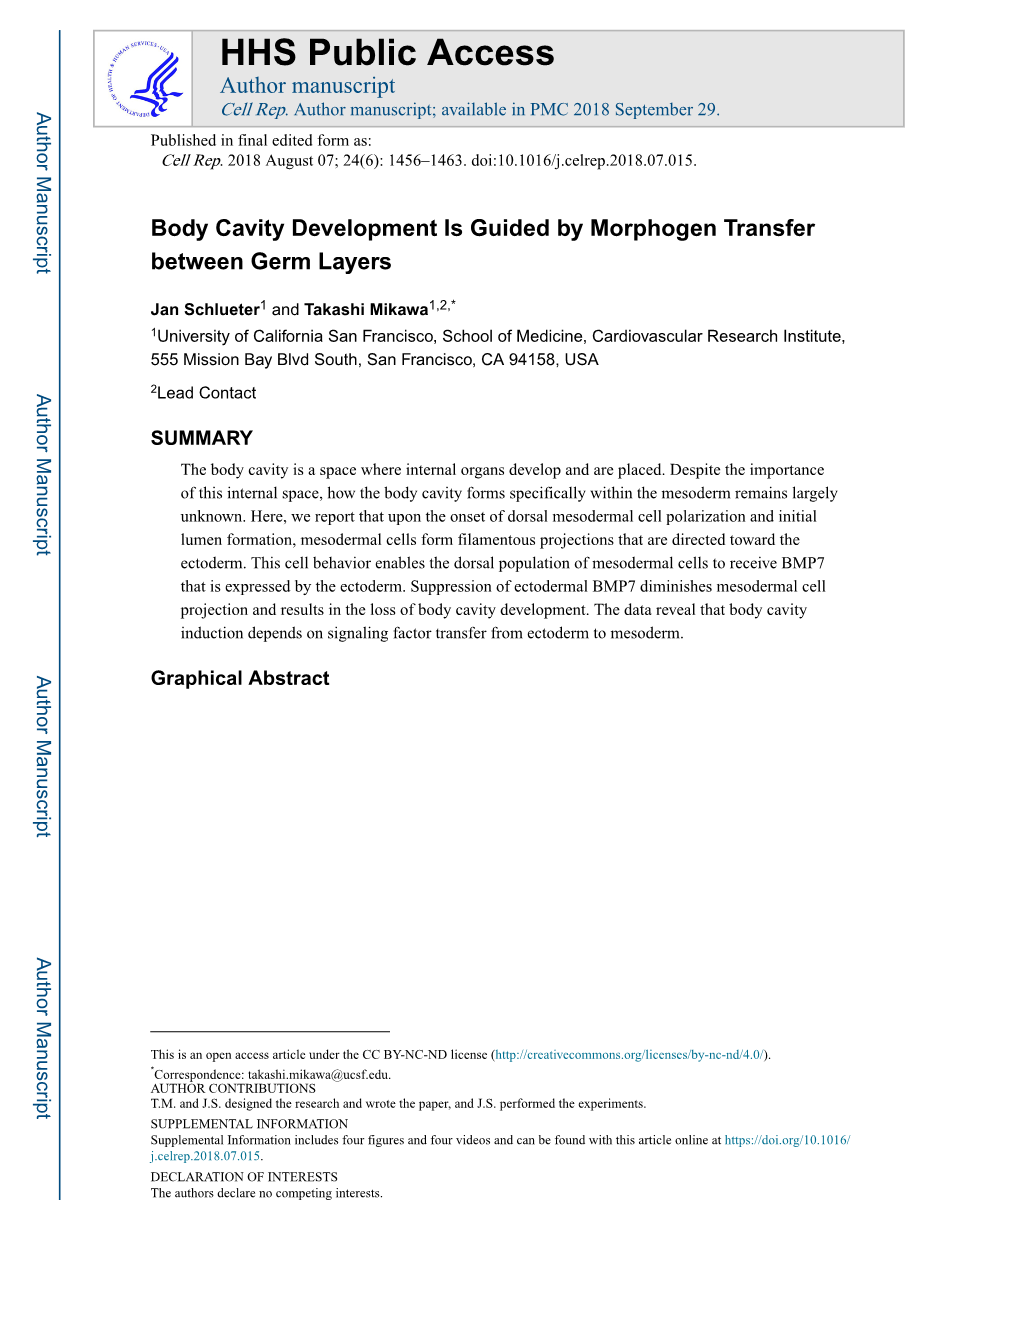 Body Cavity Development Is Guided by Morphogen Transfer Between Germ Layers